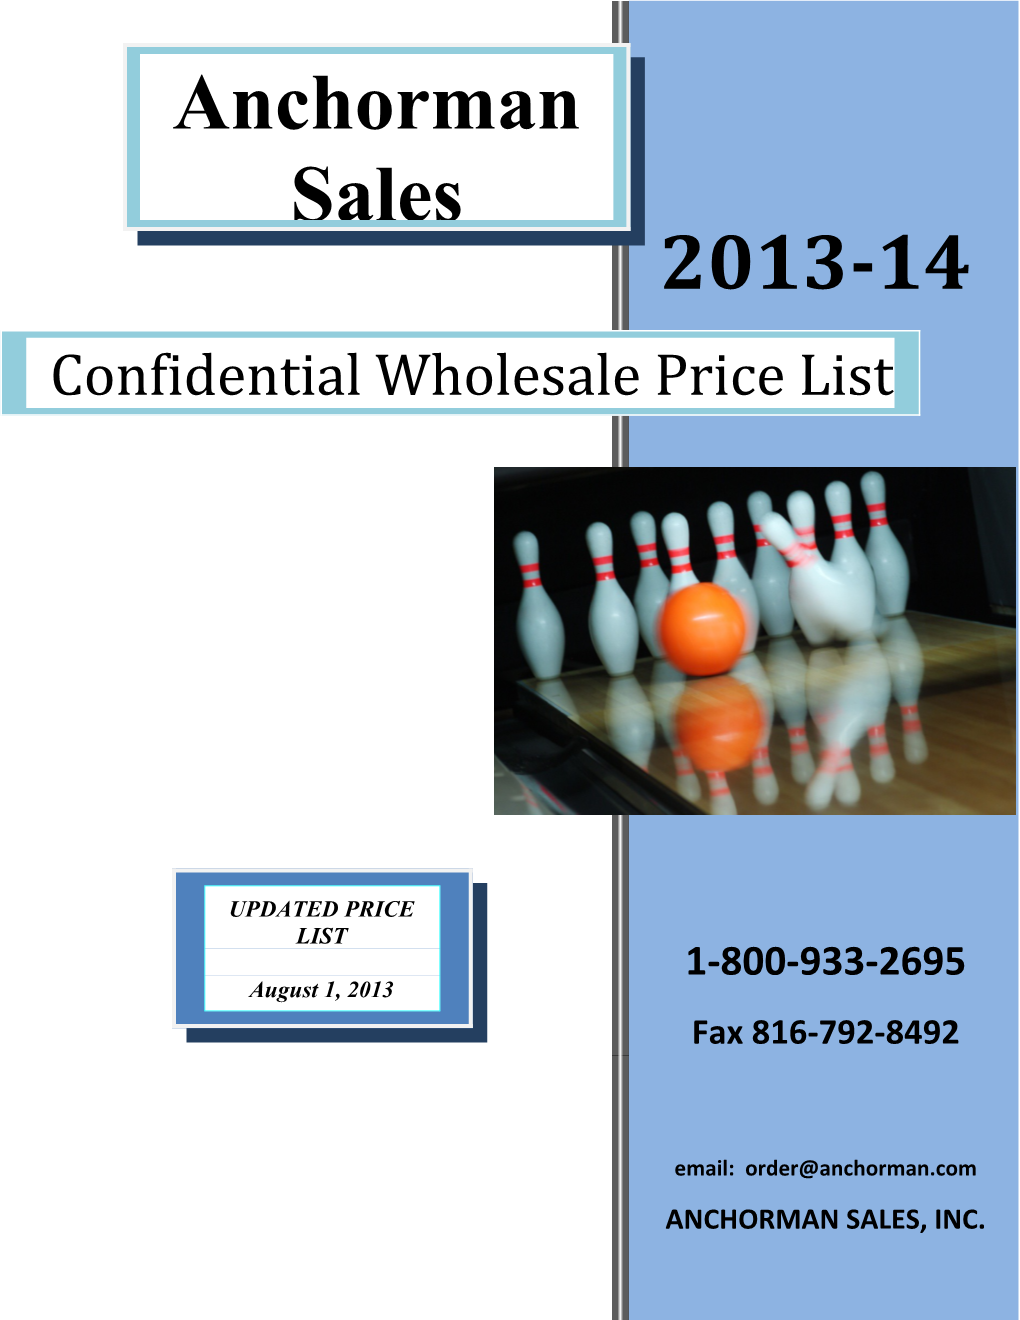 Confidential Wholesale Price List